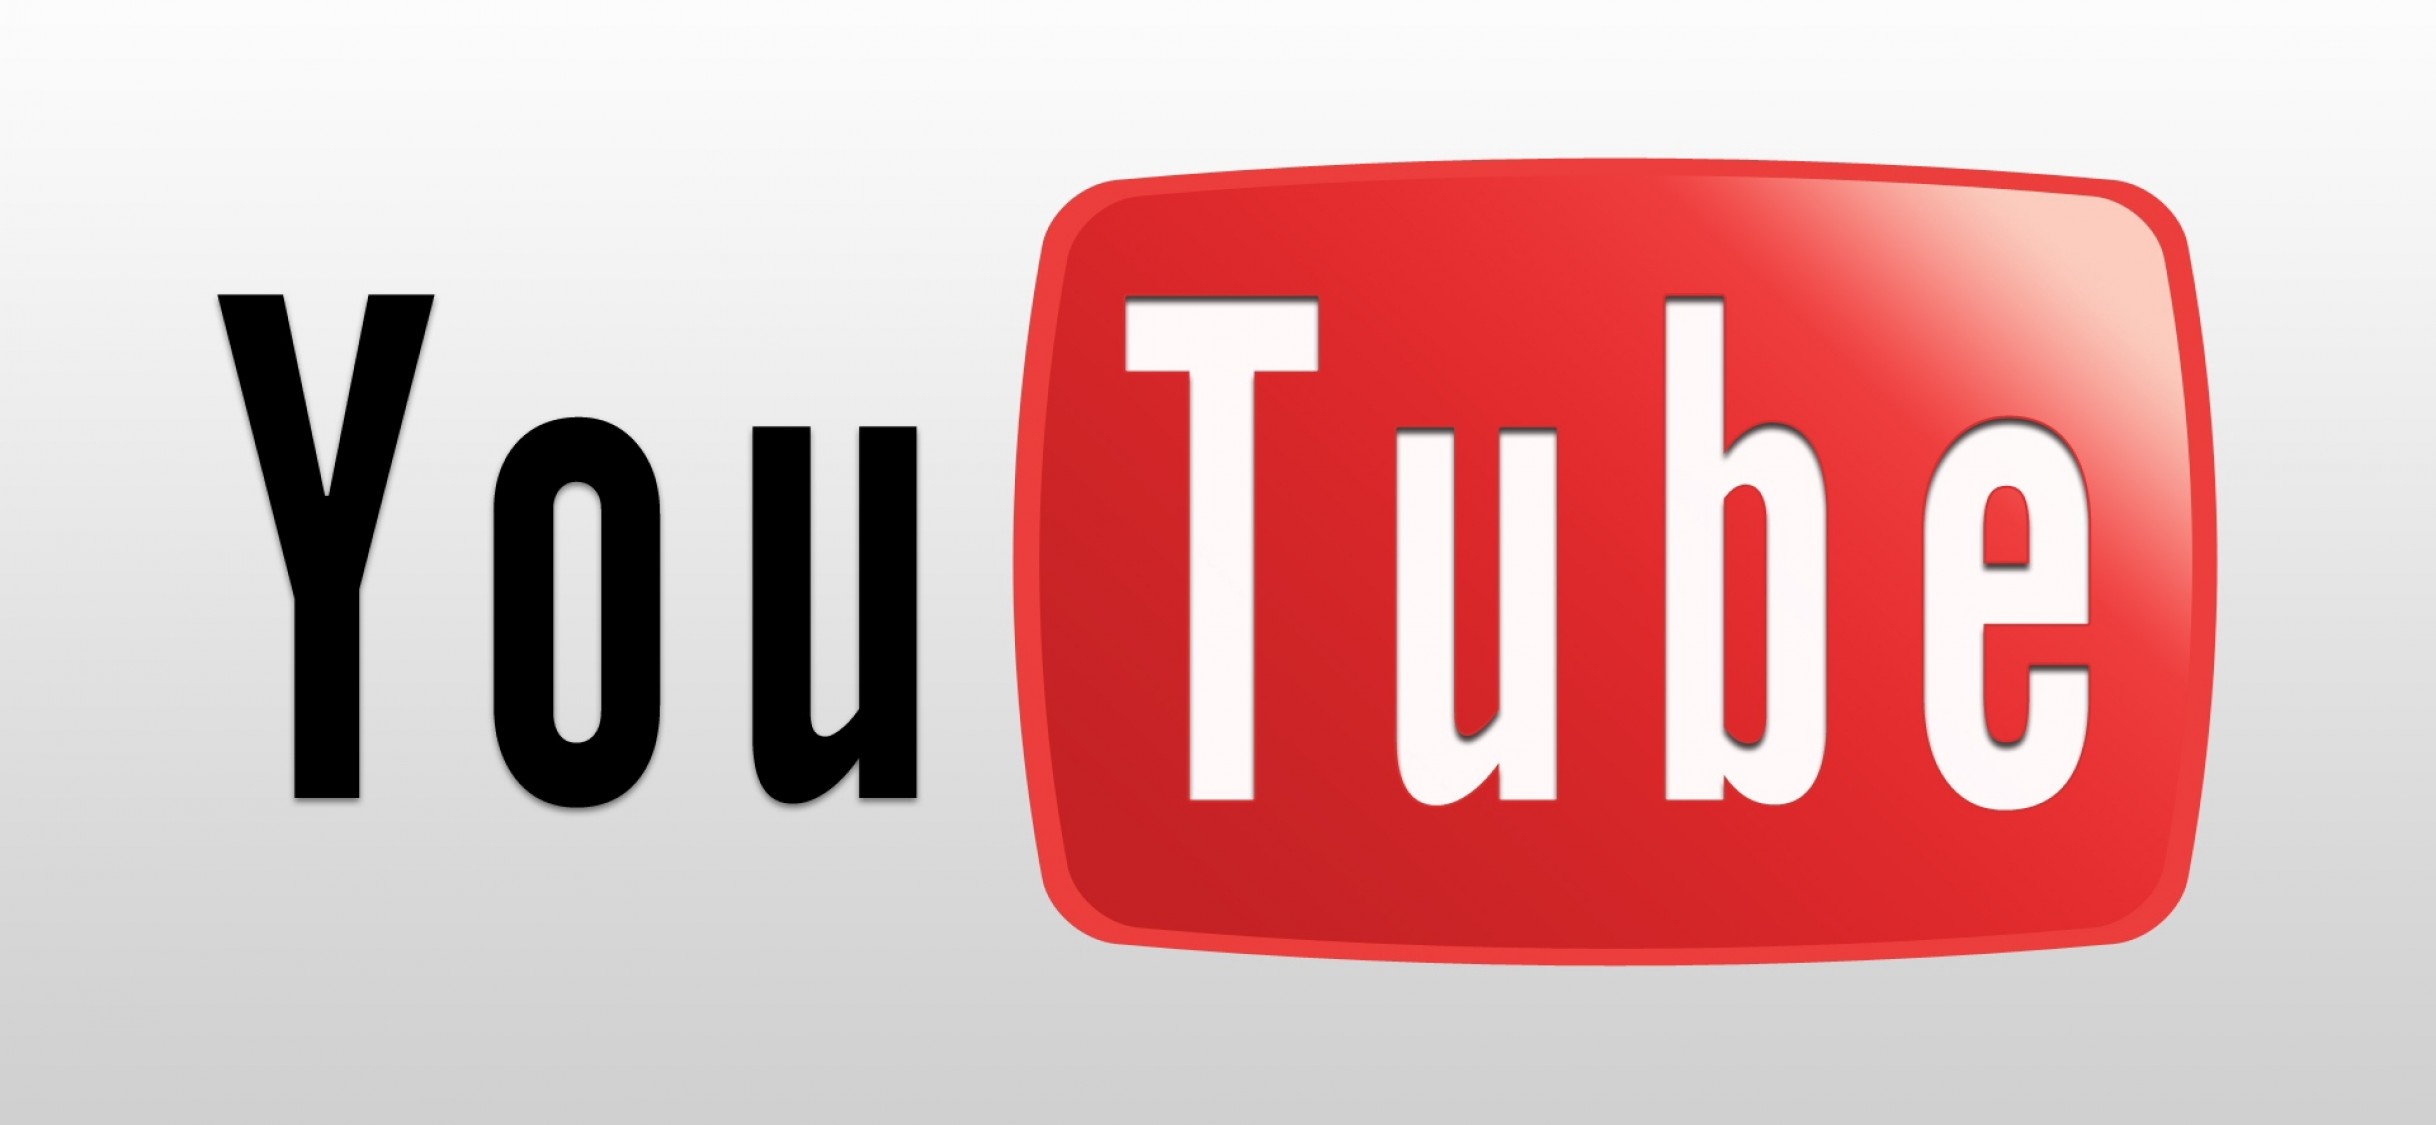 Youtube logo HD Wallpaper